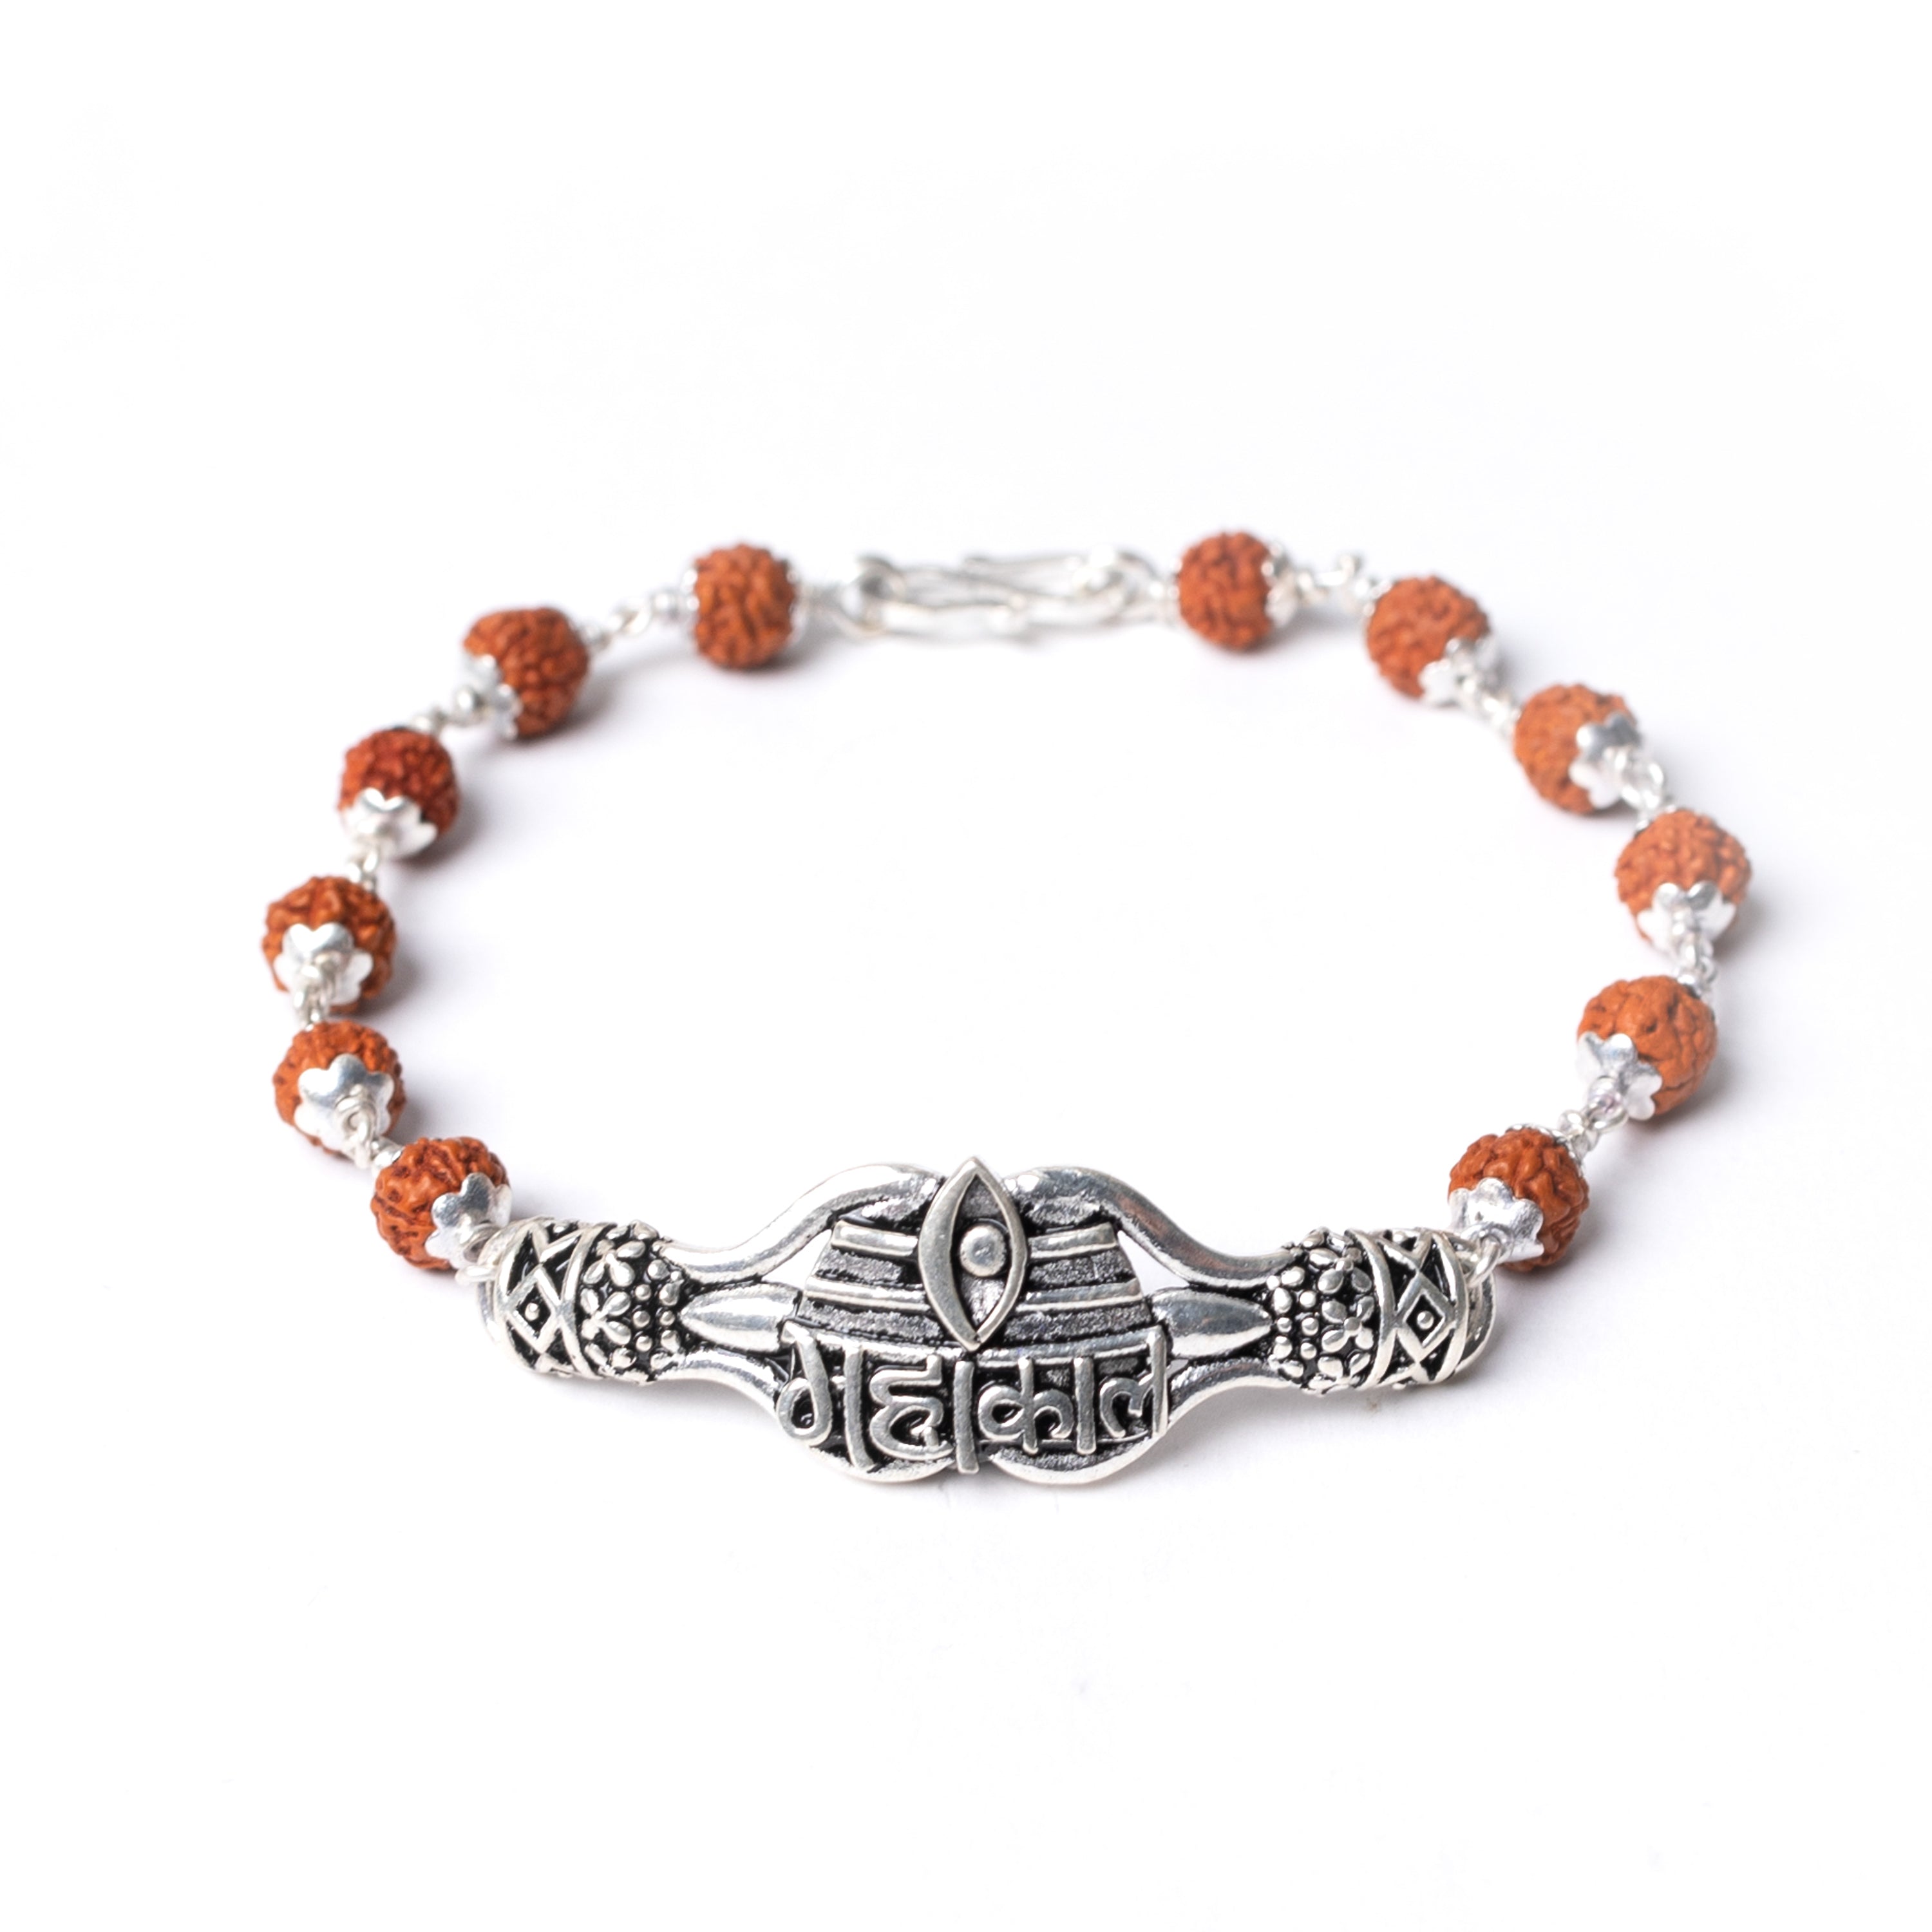 Buy Handmade Sterling Silver Lord Shiva Trident Kada Mahakal Bracelet,  Rudraksh Bracelet, Customized Babhubali Bangle Kada Giftig Jewelry Nsk696  Online in India - Etsy